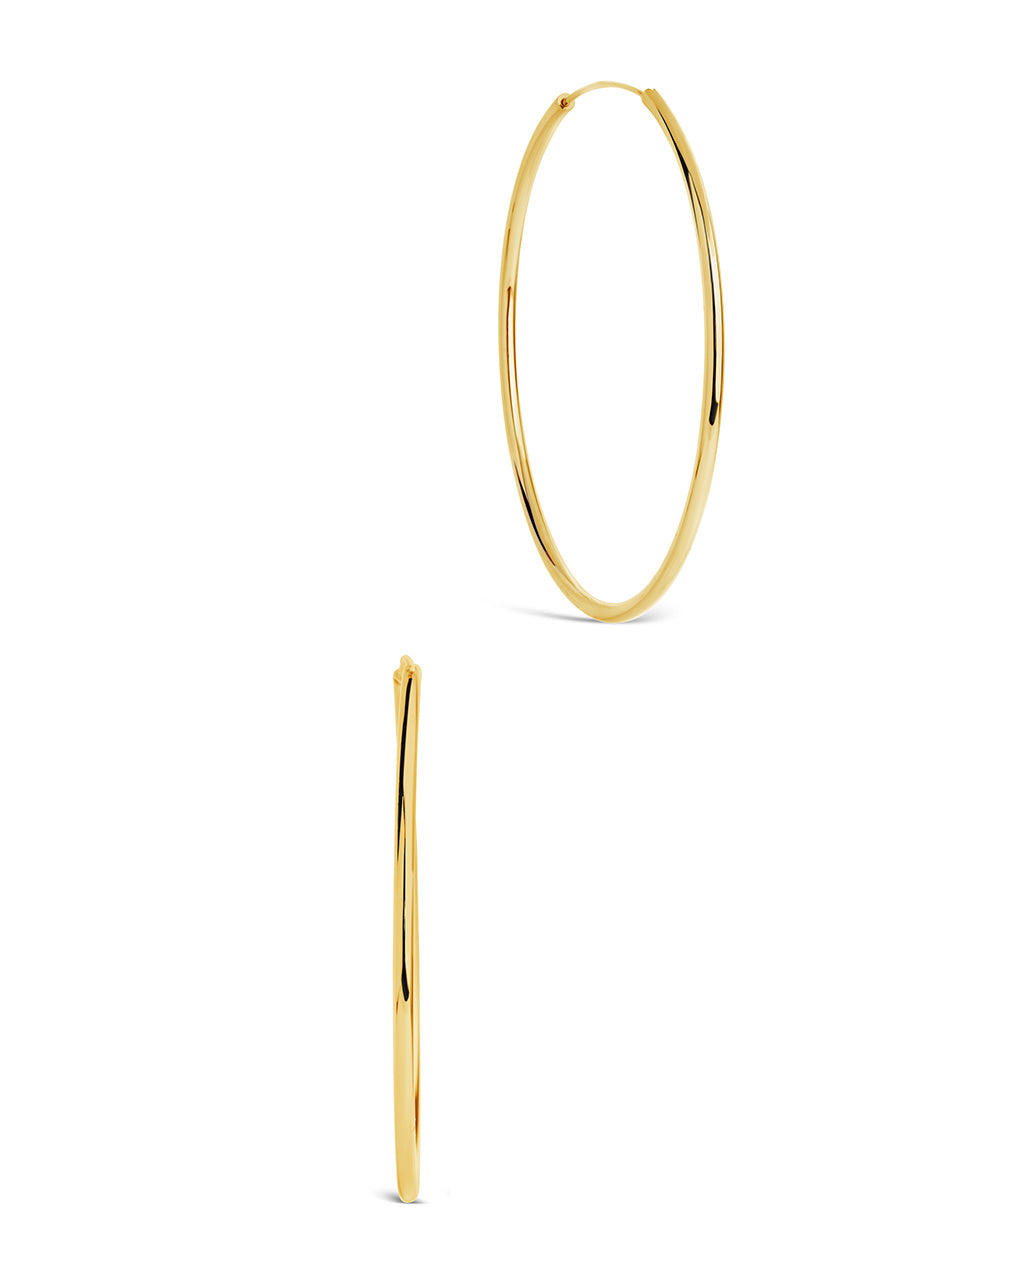 2.7" Infinity Hoop Earrings Earring Sterling Forever Gold 